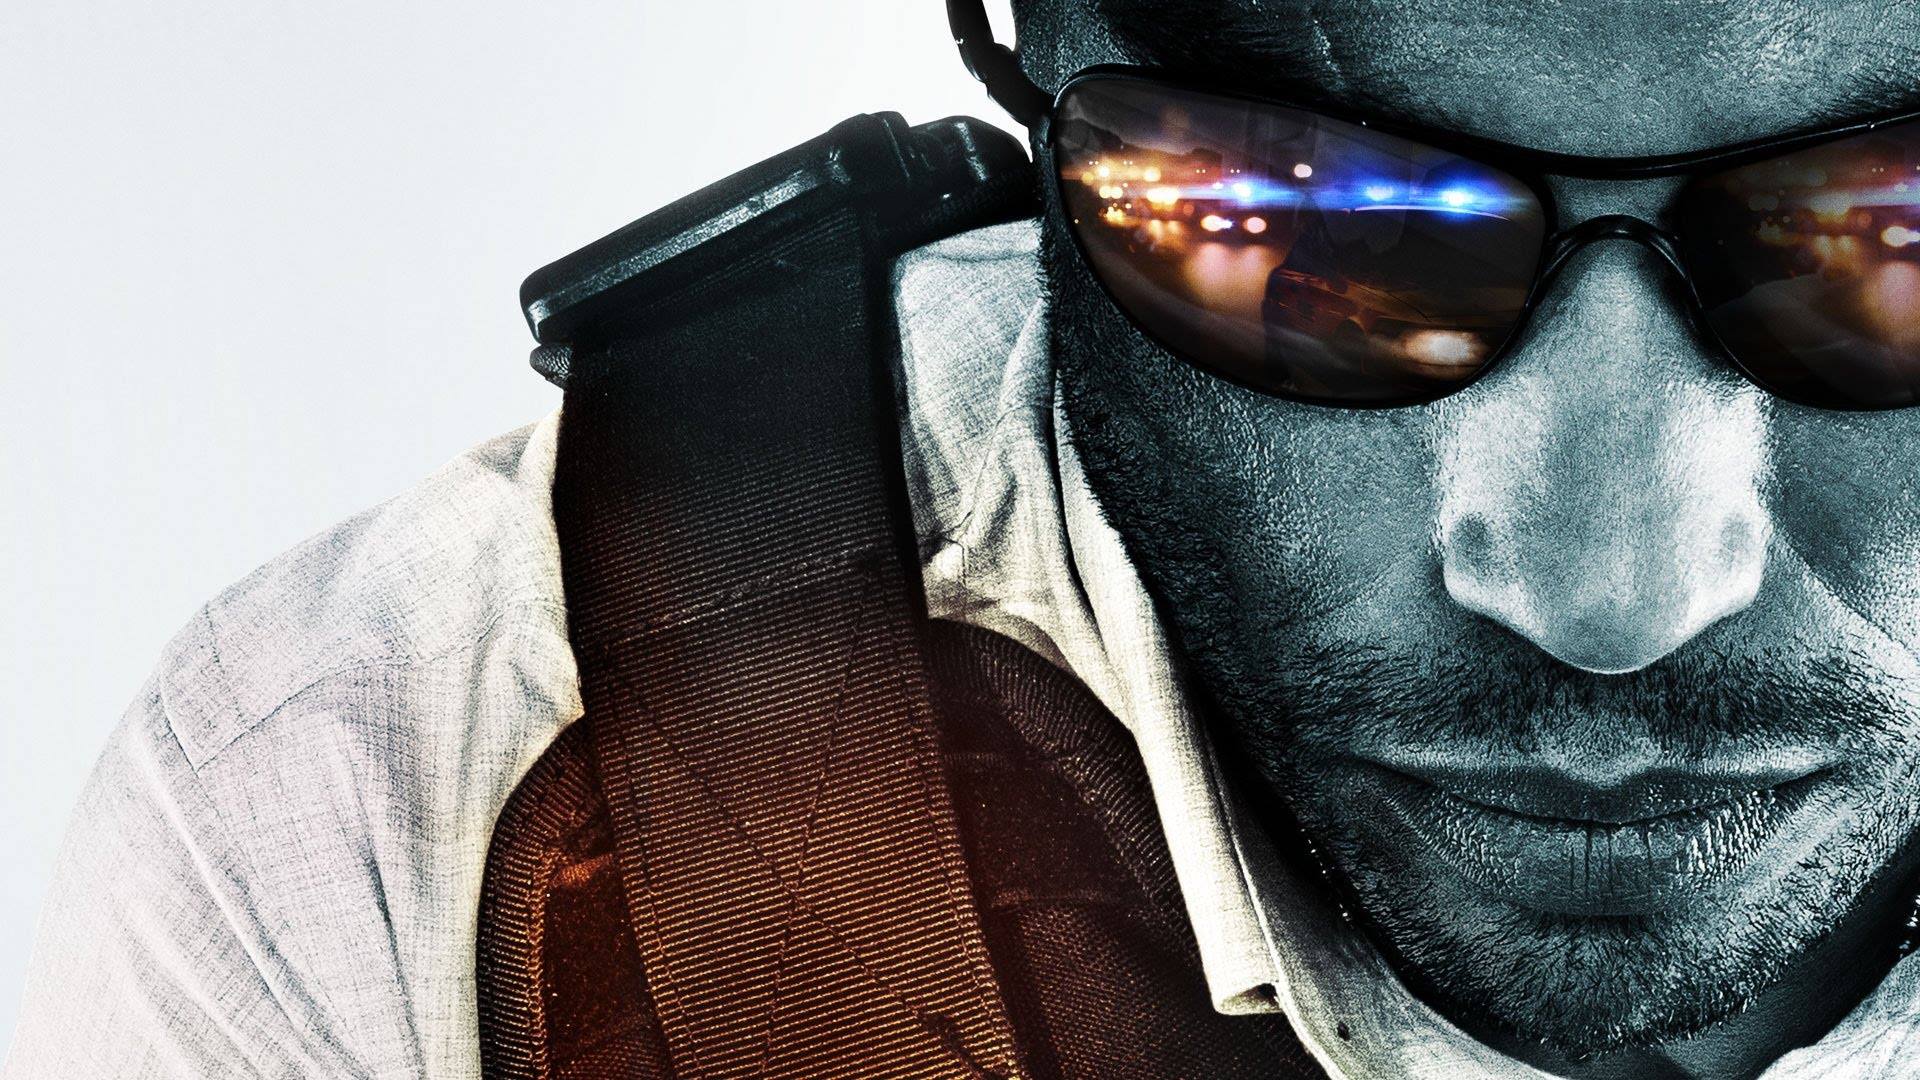 Video Game Battlefield Hardline HD Wallpaper | Background Image